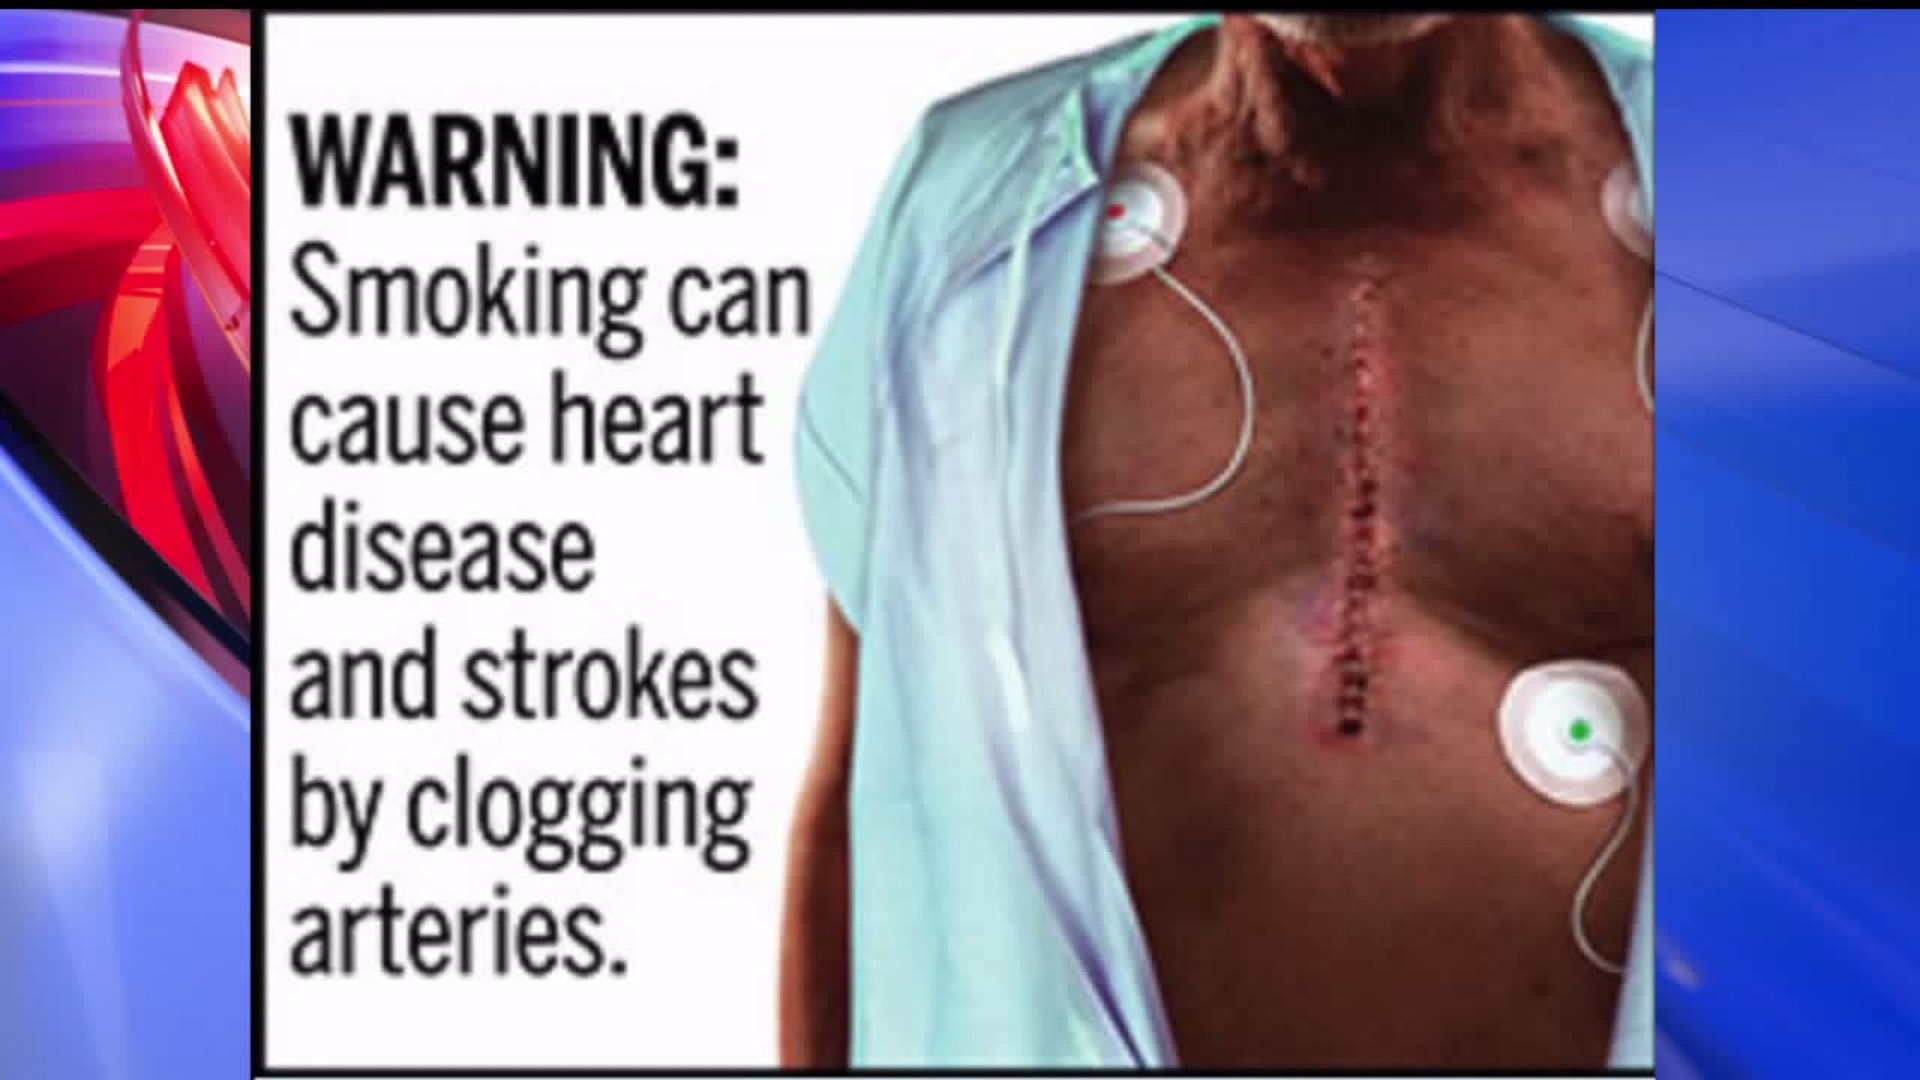 FDA proposes graphic cigarette label warnings